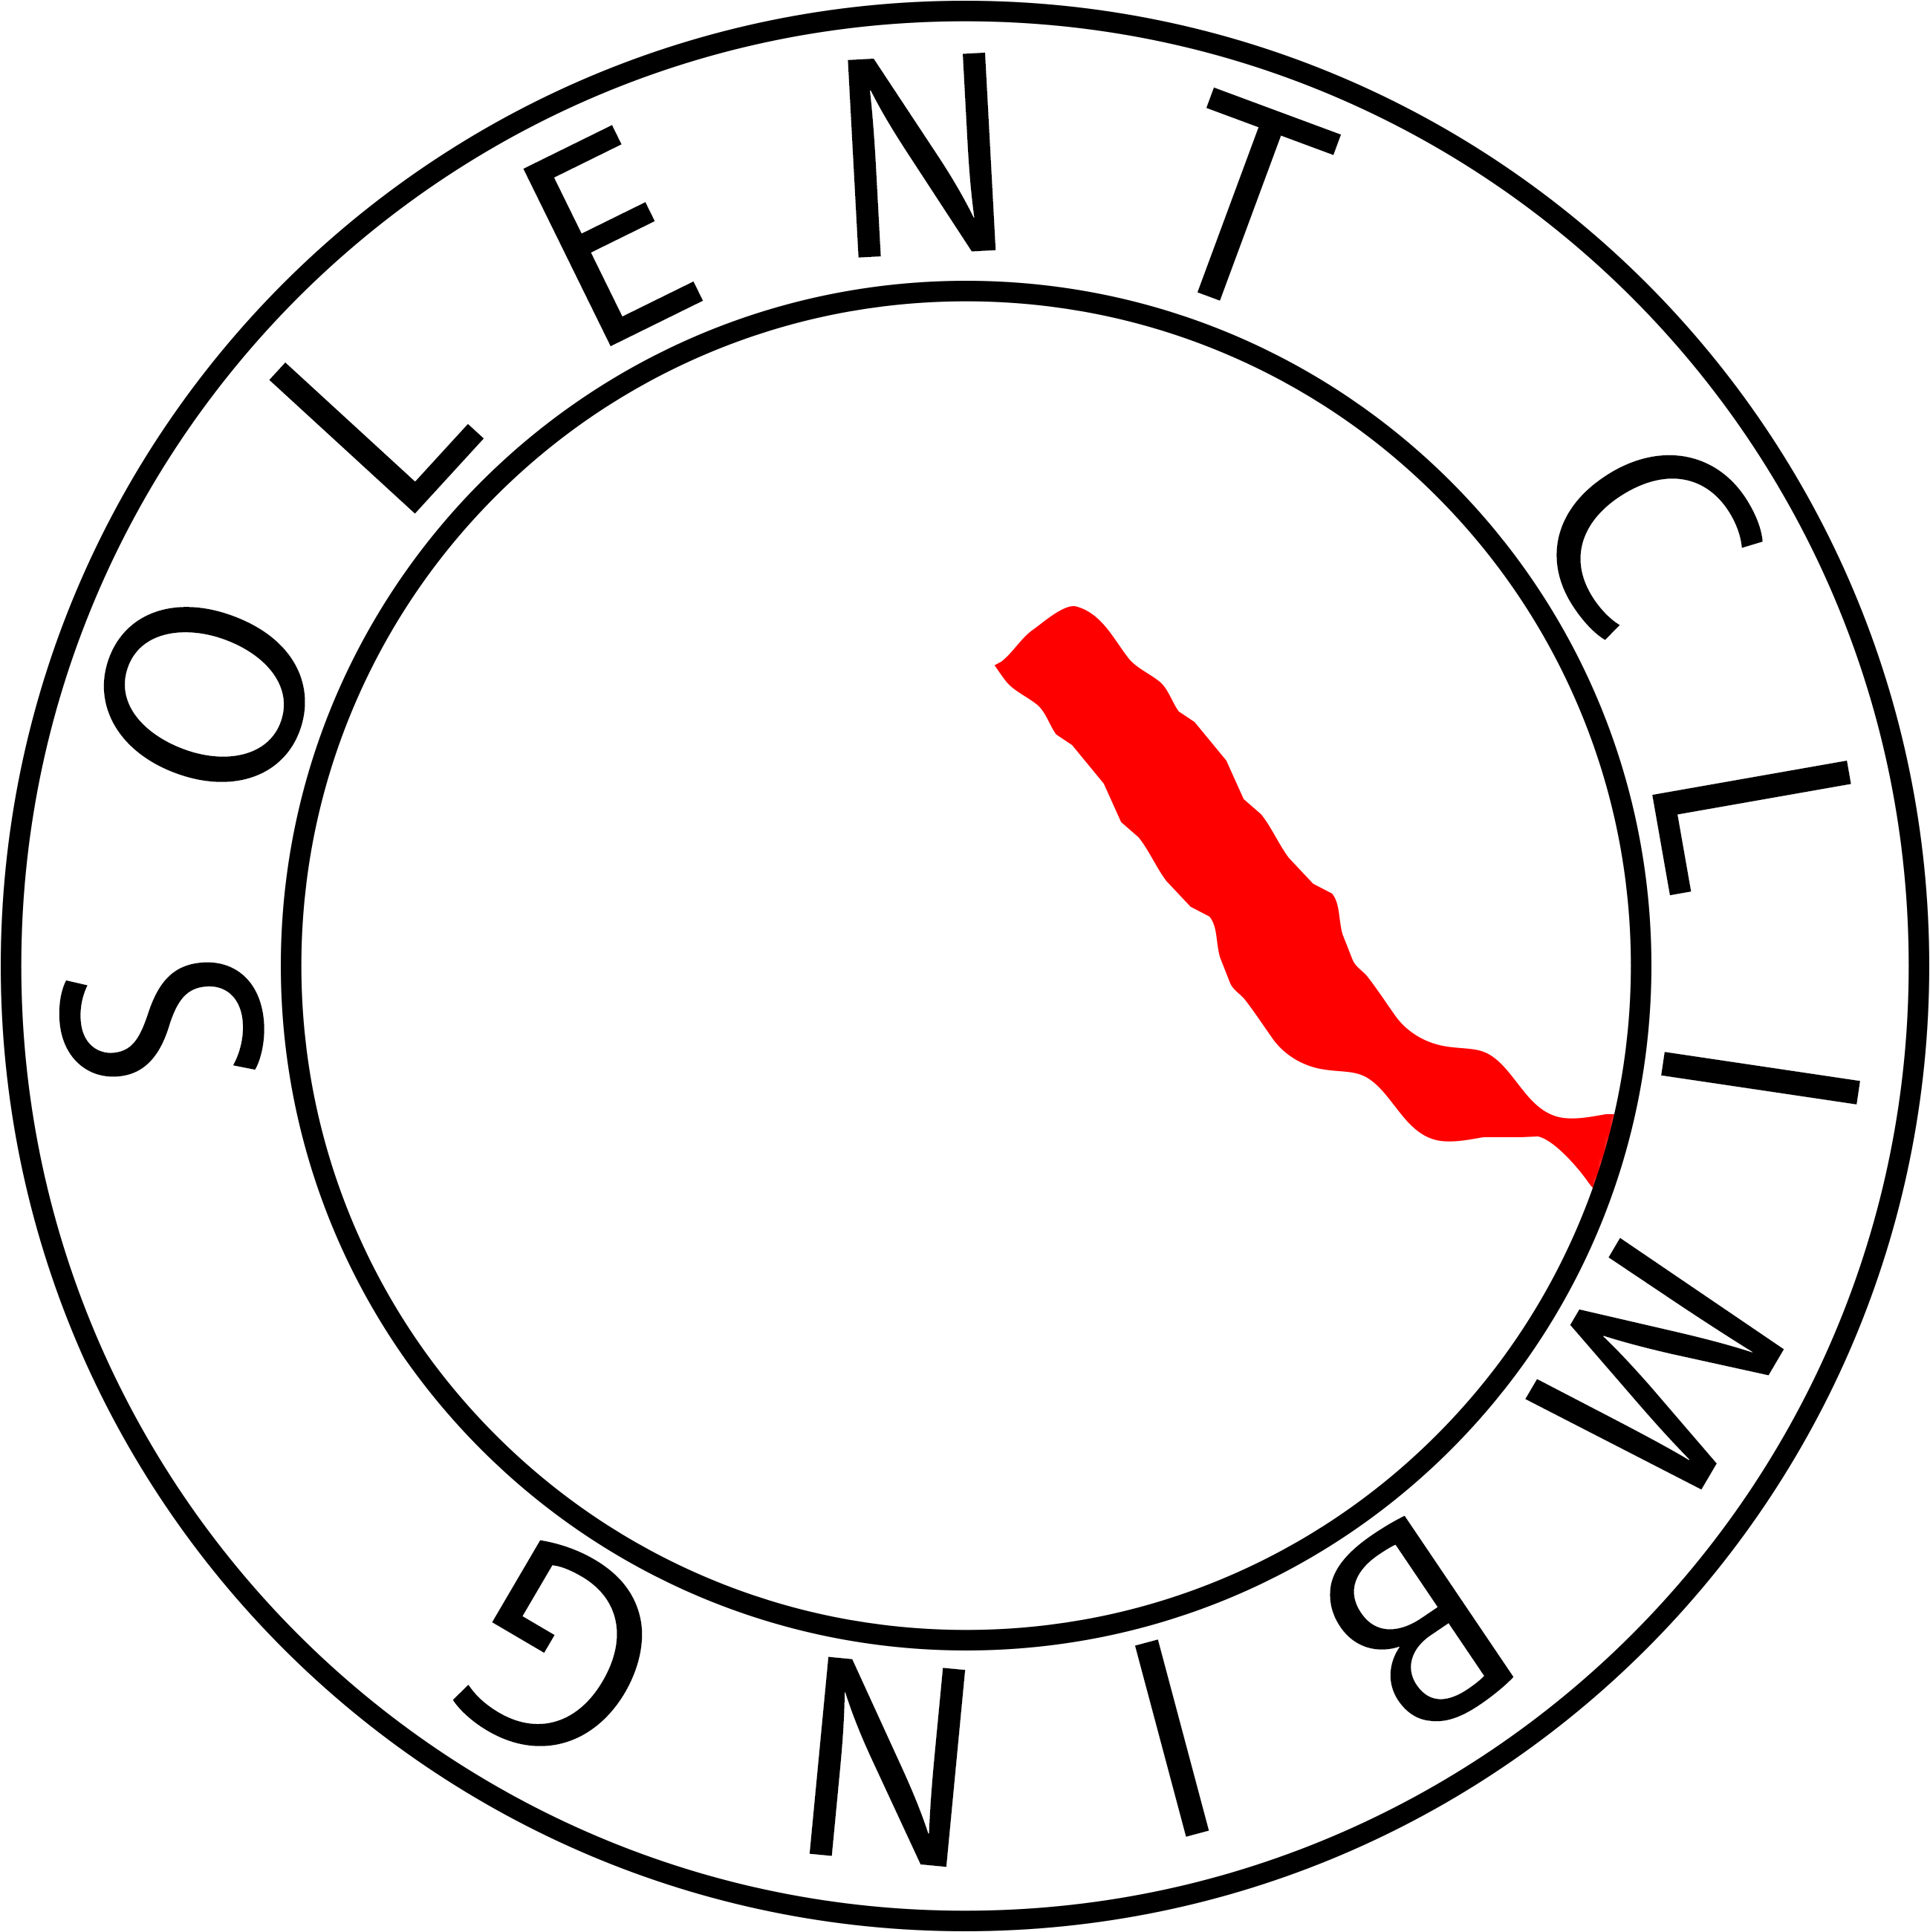 Team Solent Climbing